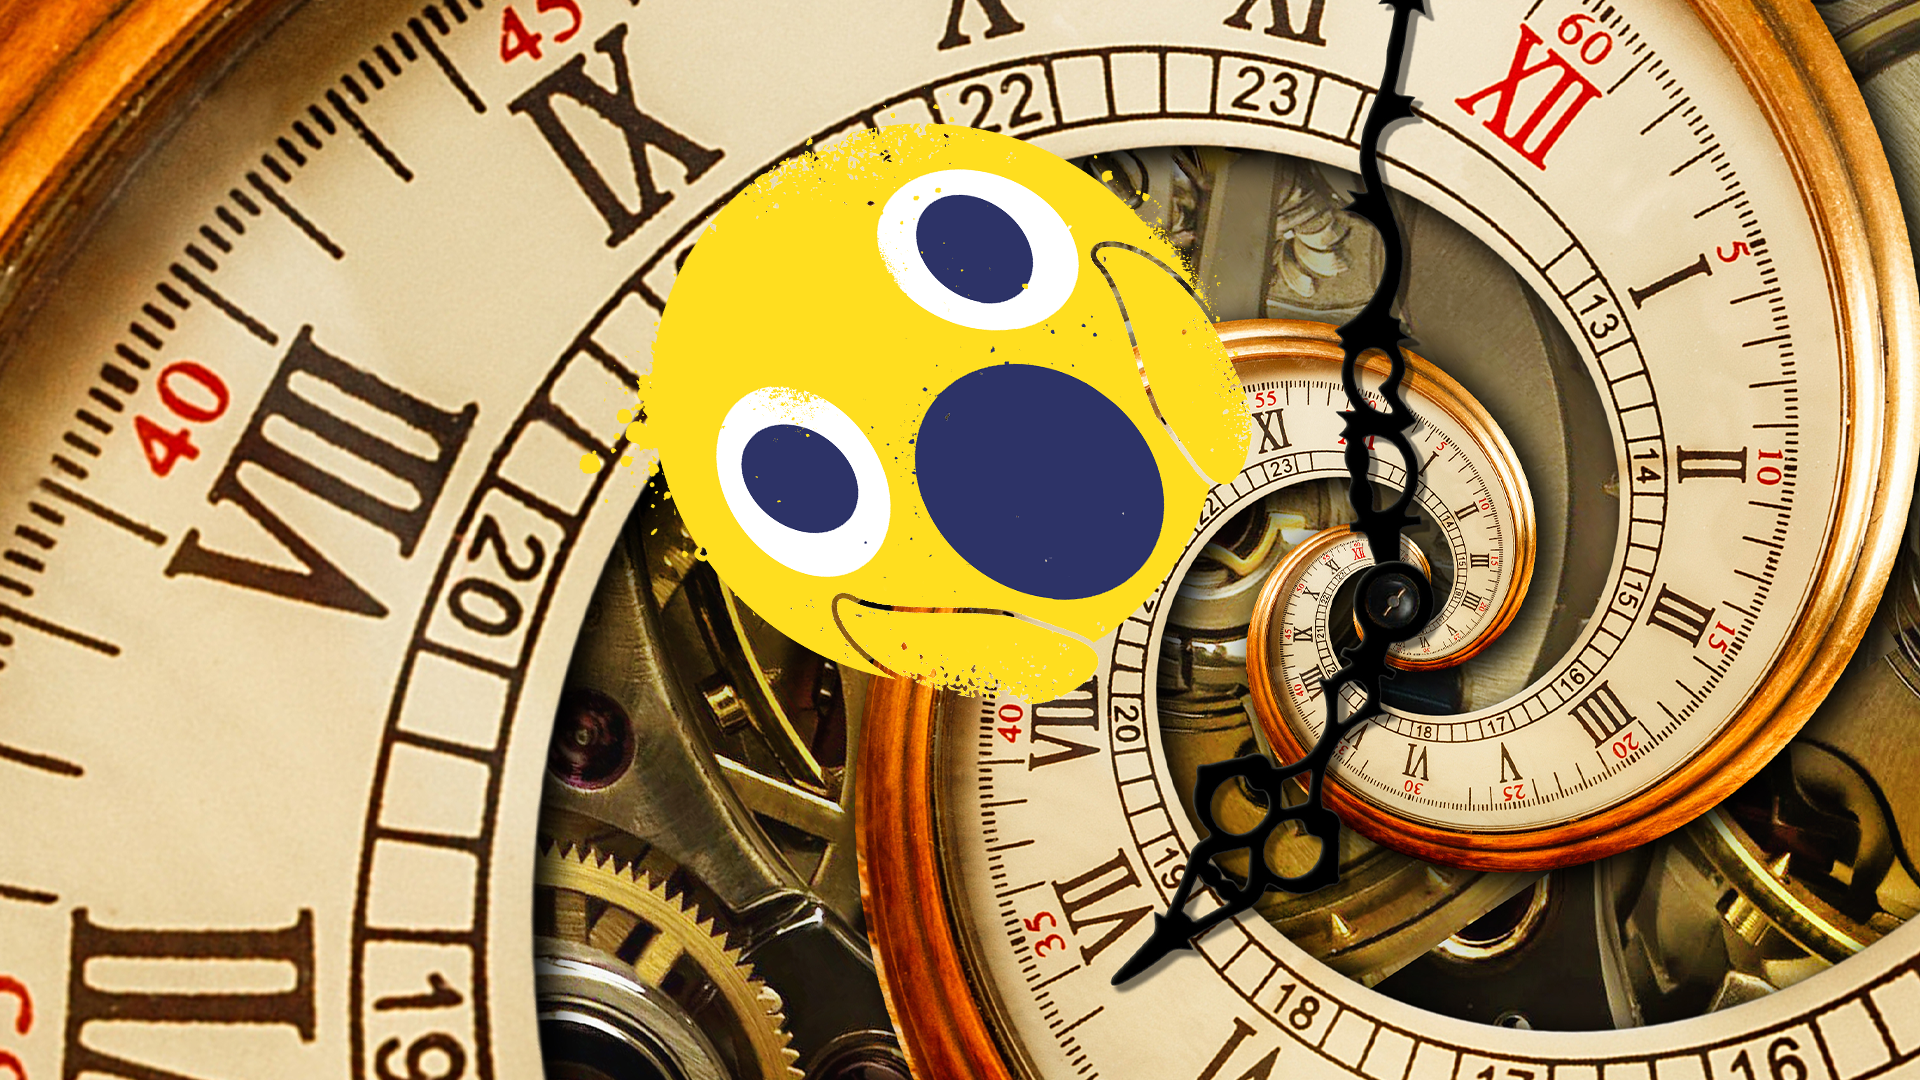 Spiralling clocks with shocked emoji